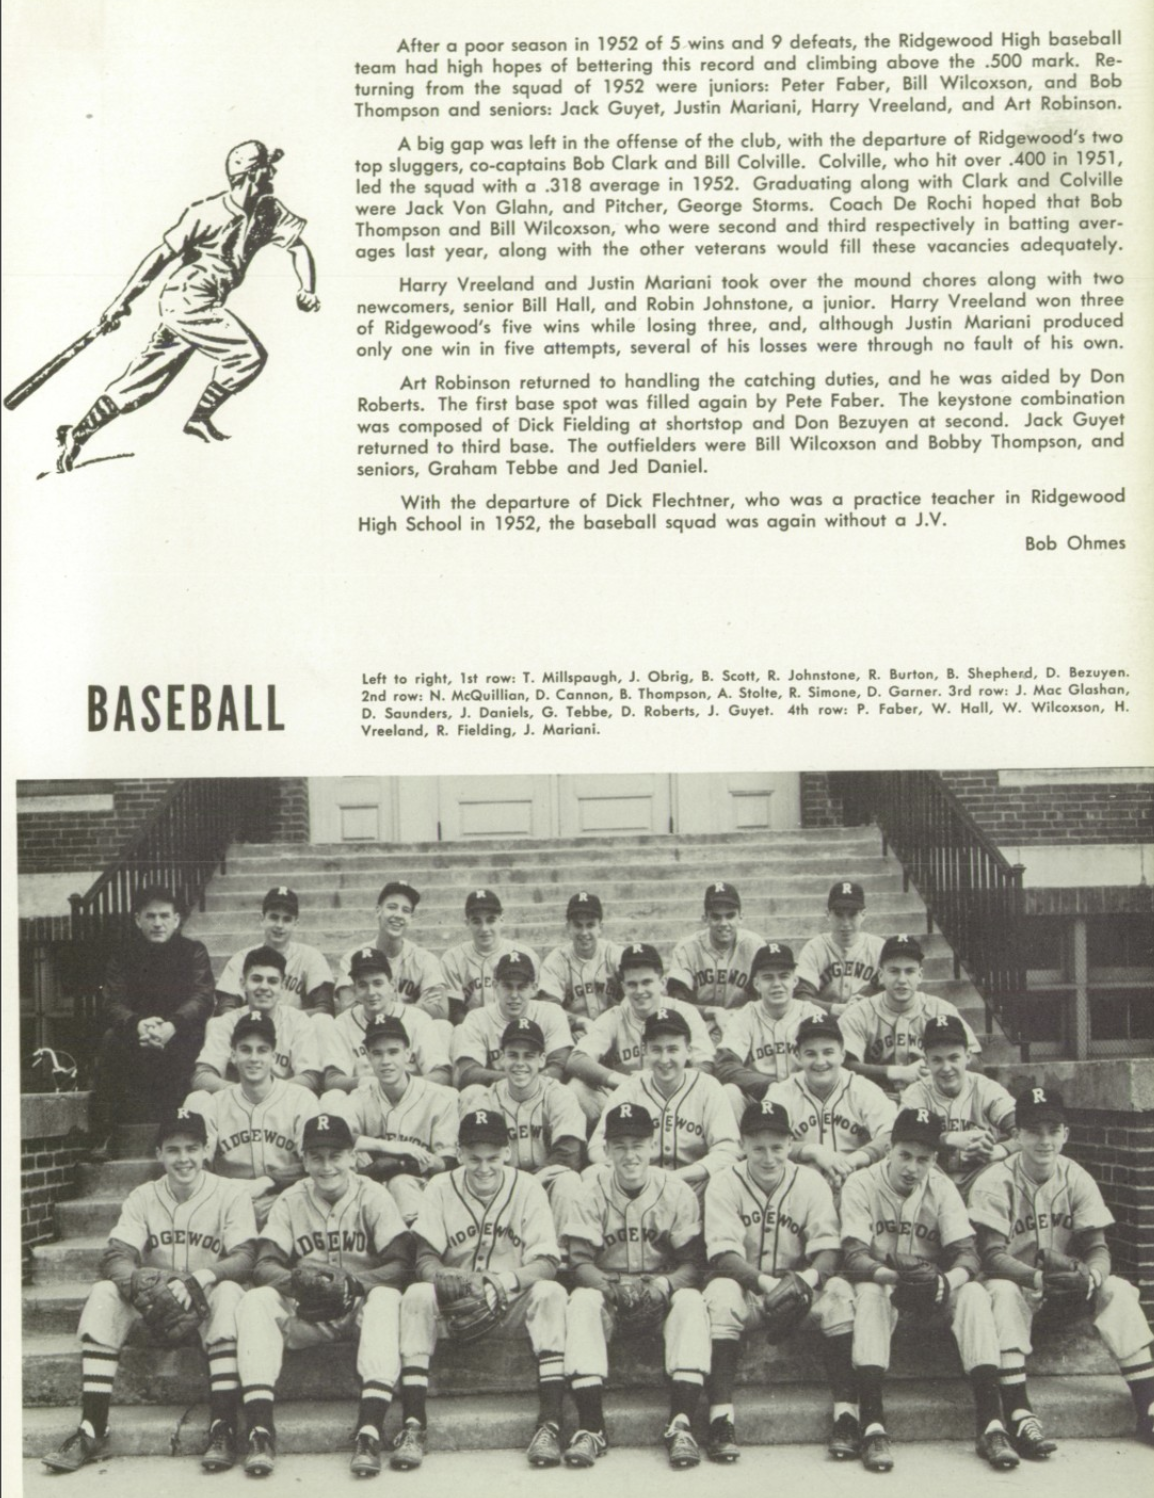 1953 Boys’ Baseball Team